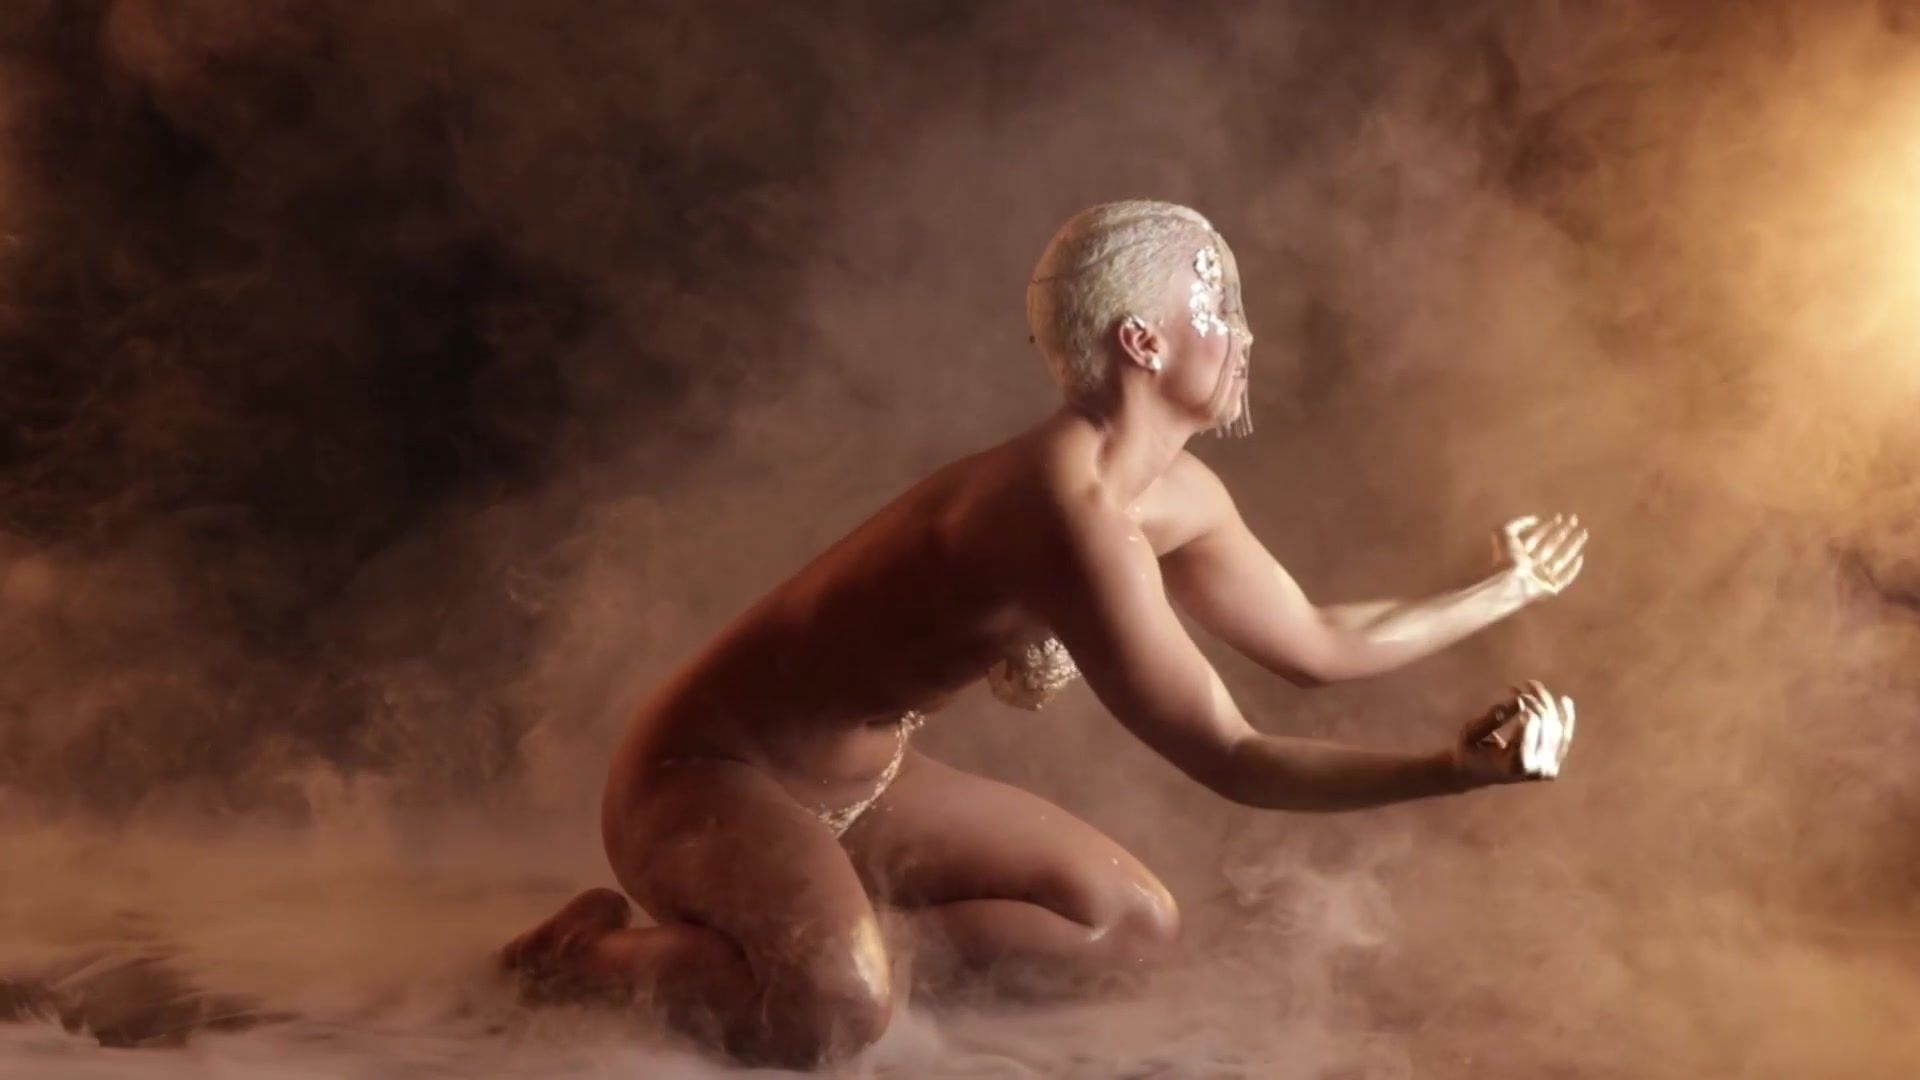 Luscious Naked on Stage Performance - Ufo Extreme Gold Art Tube77